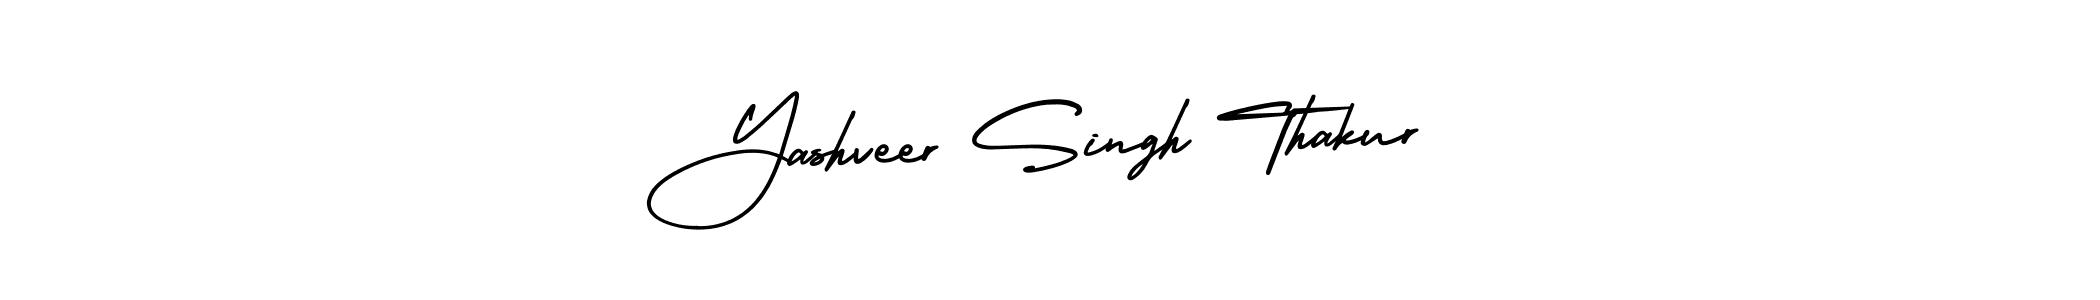 Best and Professional Signature Style for Yashveer Singh Thakur. AmerikaSignatureDemo-Regular Best Signature Style Collection. Yashveer Singh Thakur signature style 3 images and pictures png